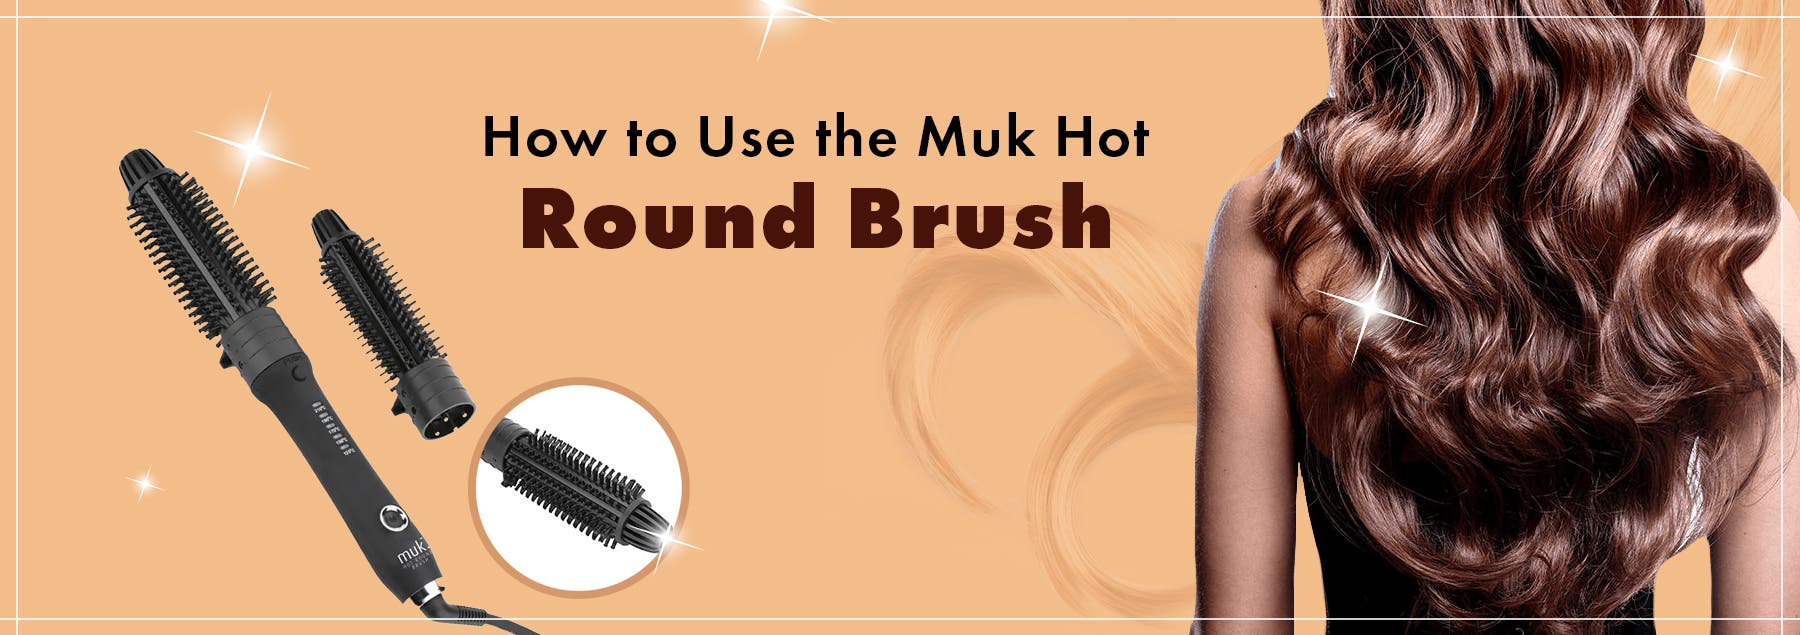 How to Use the Muk Hot Round Brush